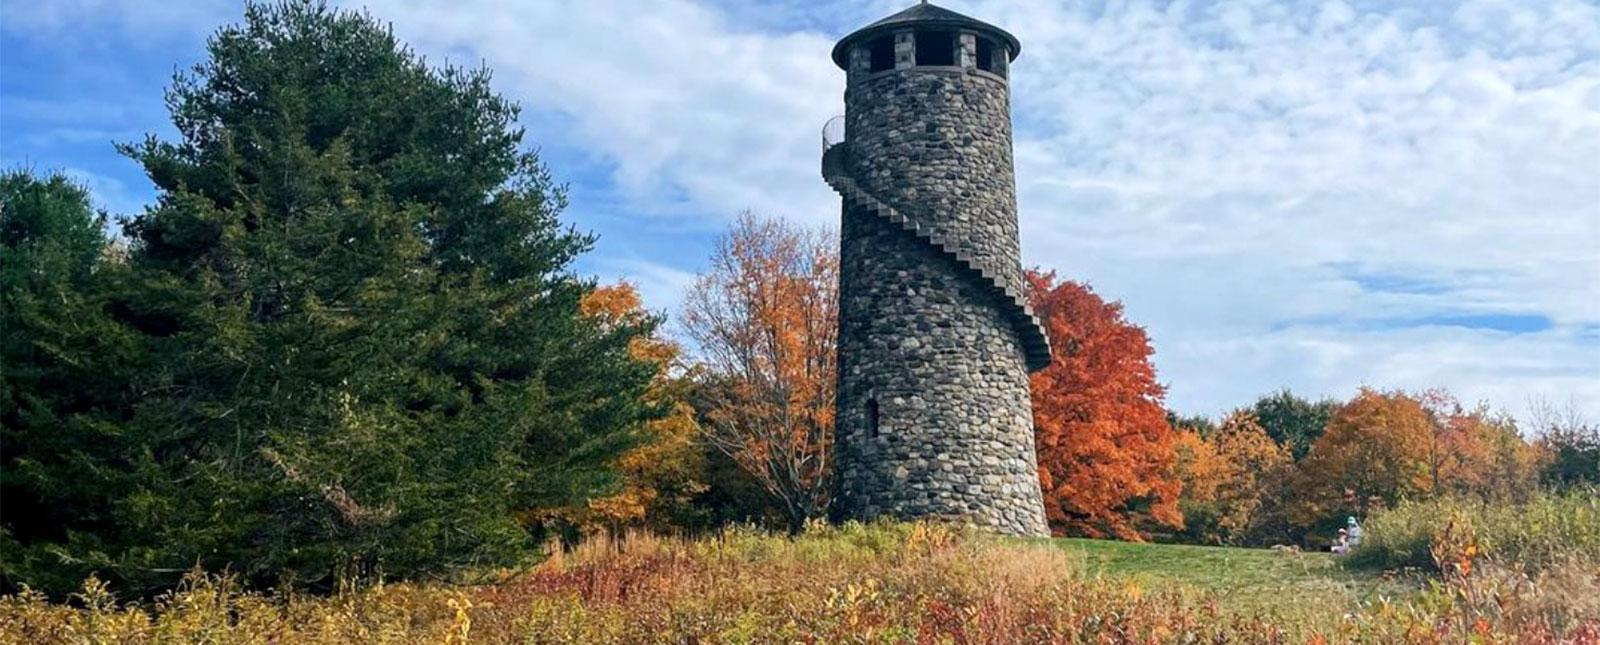 Vista de la torre Camp Columbia en otoño (Instagram@heberleinj)